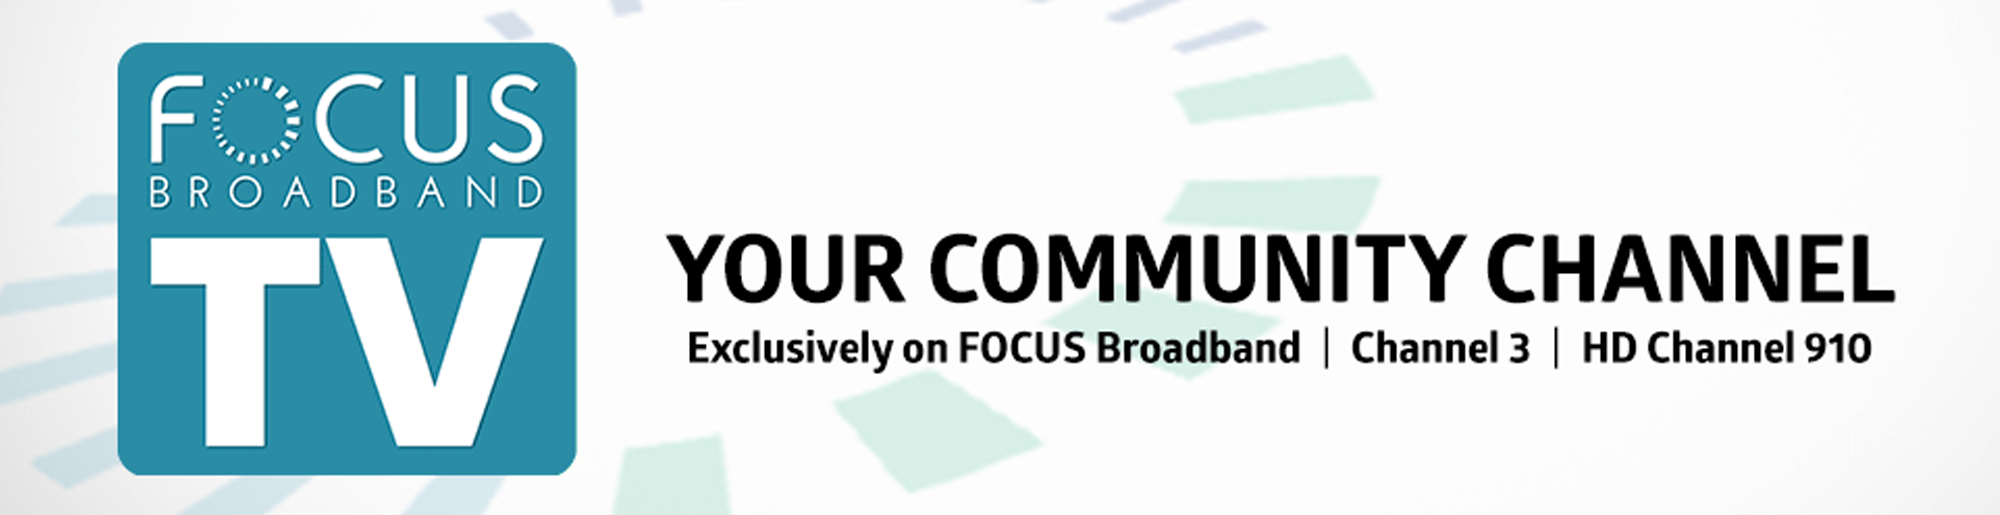 FOCUS Broadband